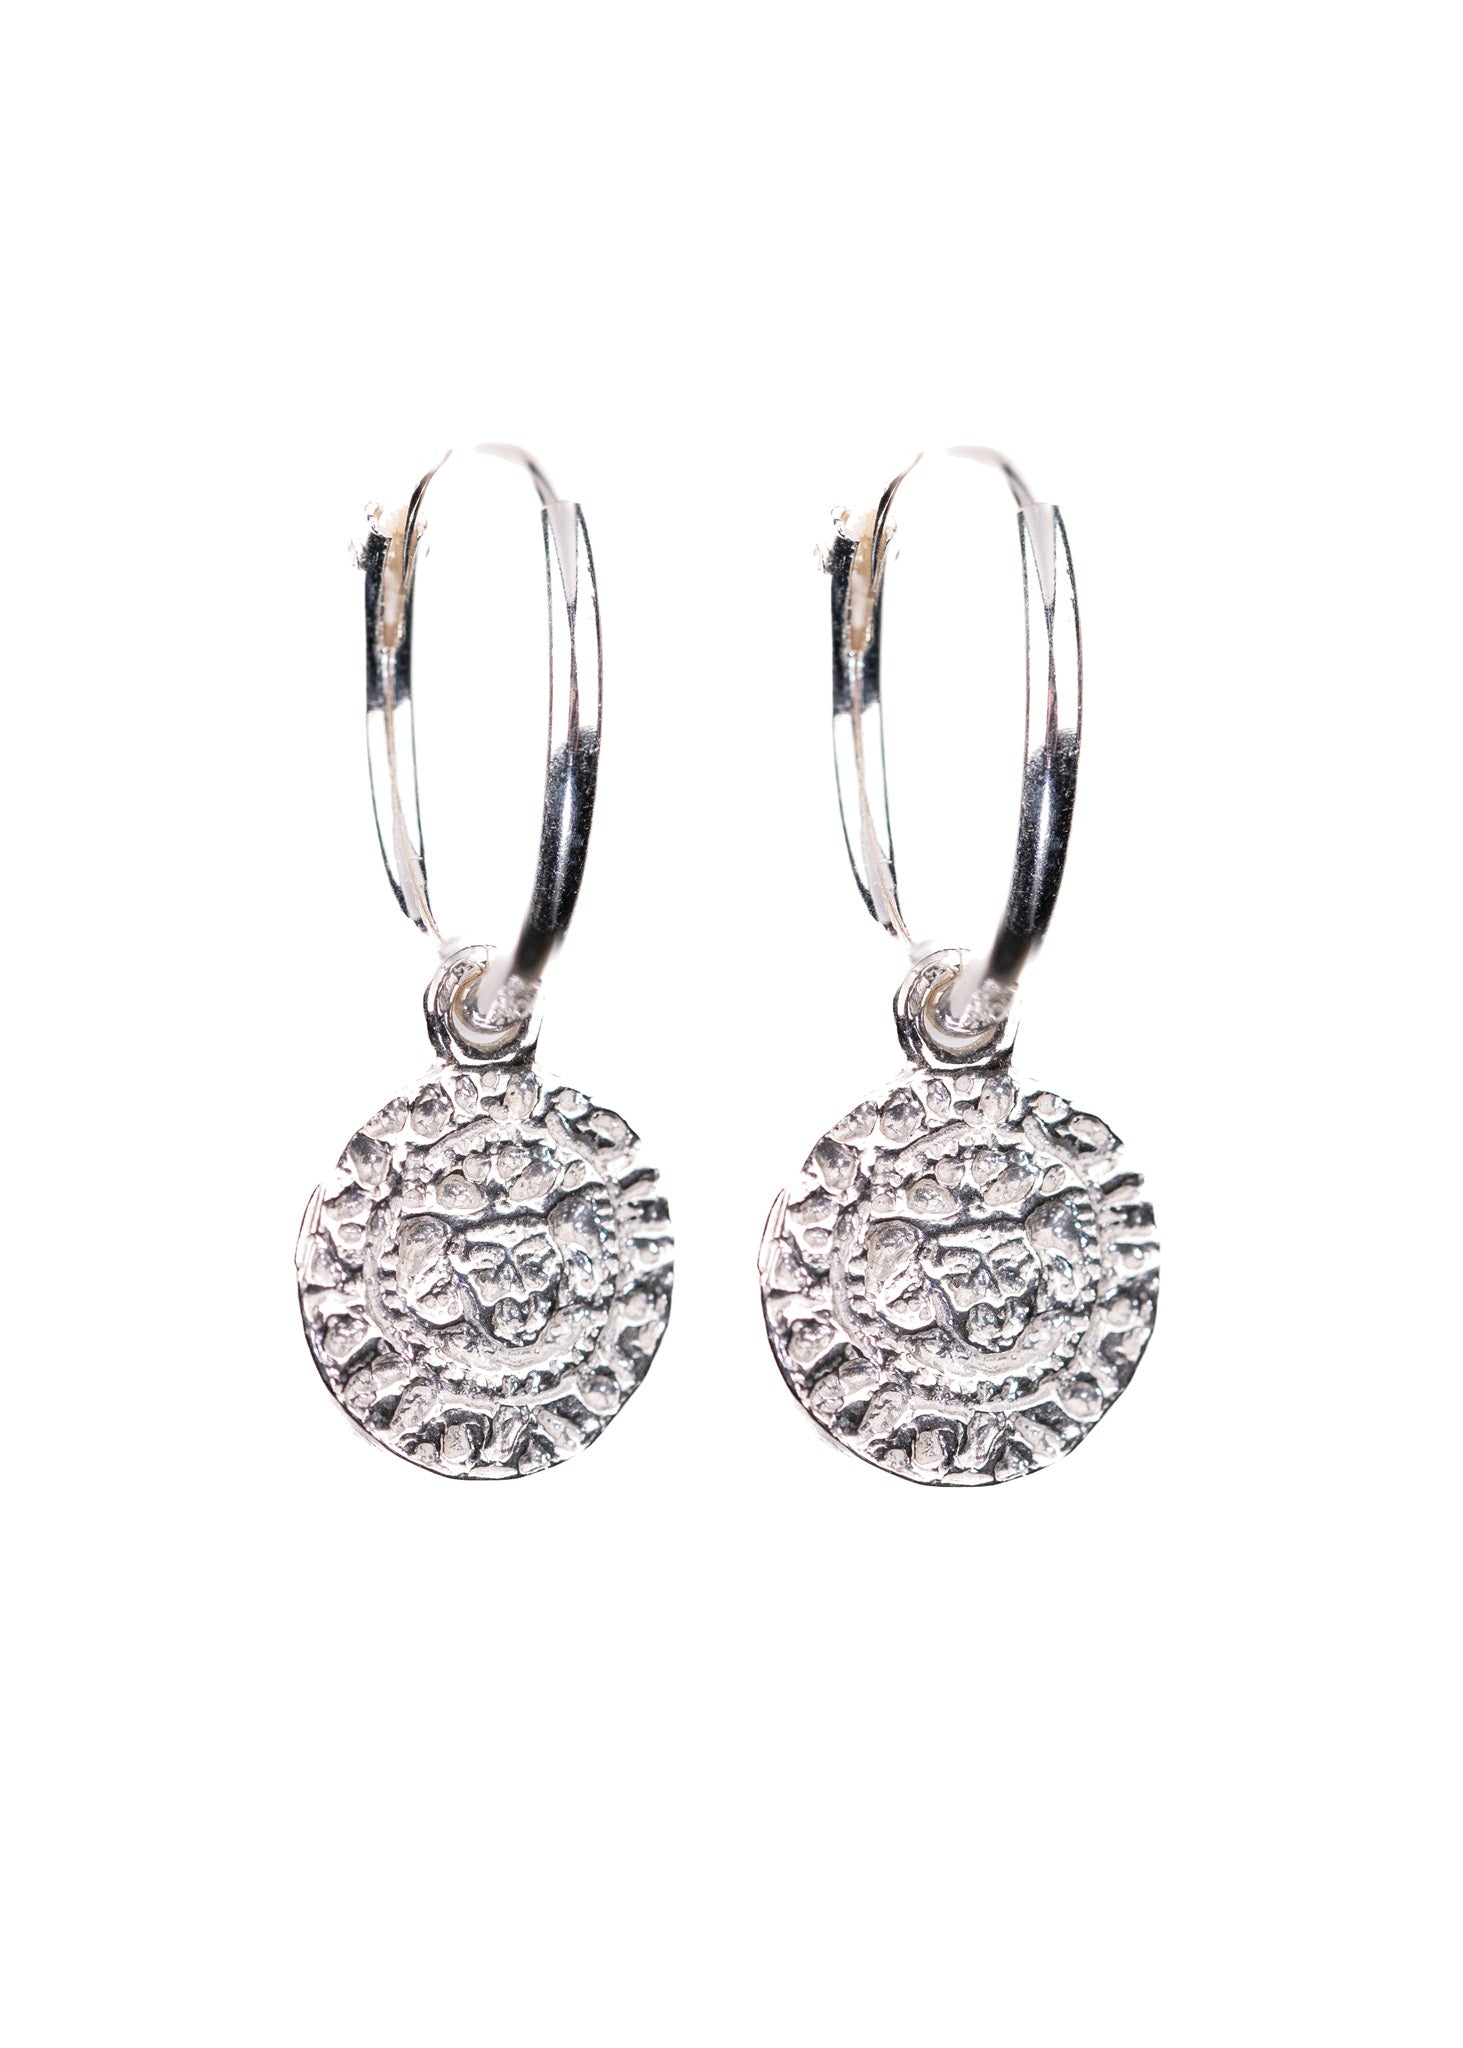 Quarter penny earrings silver